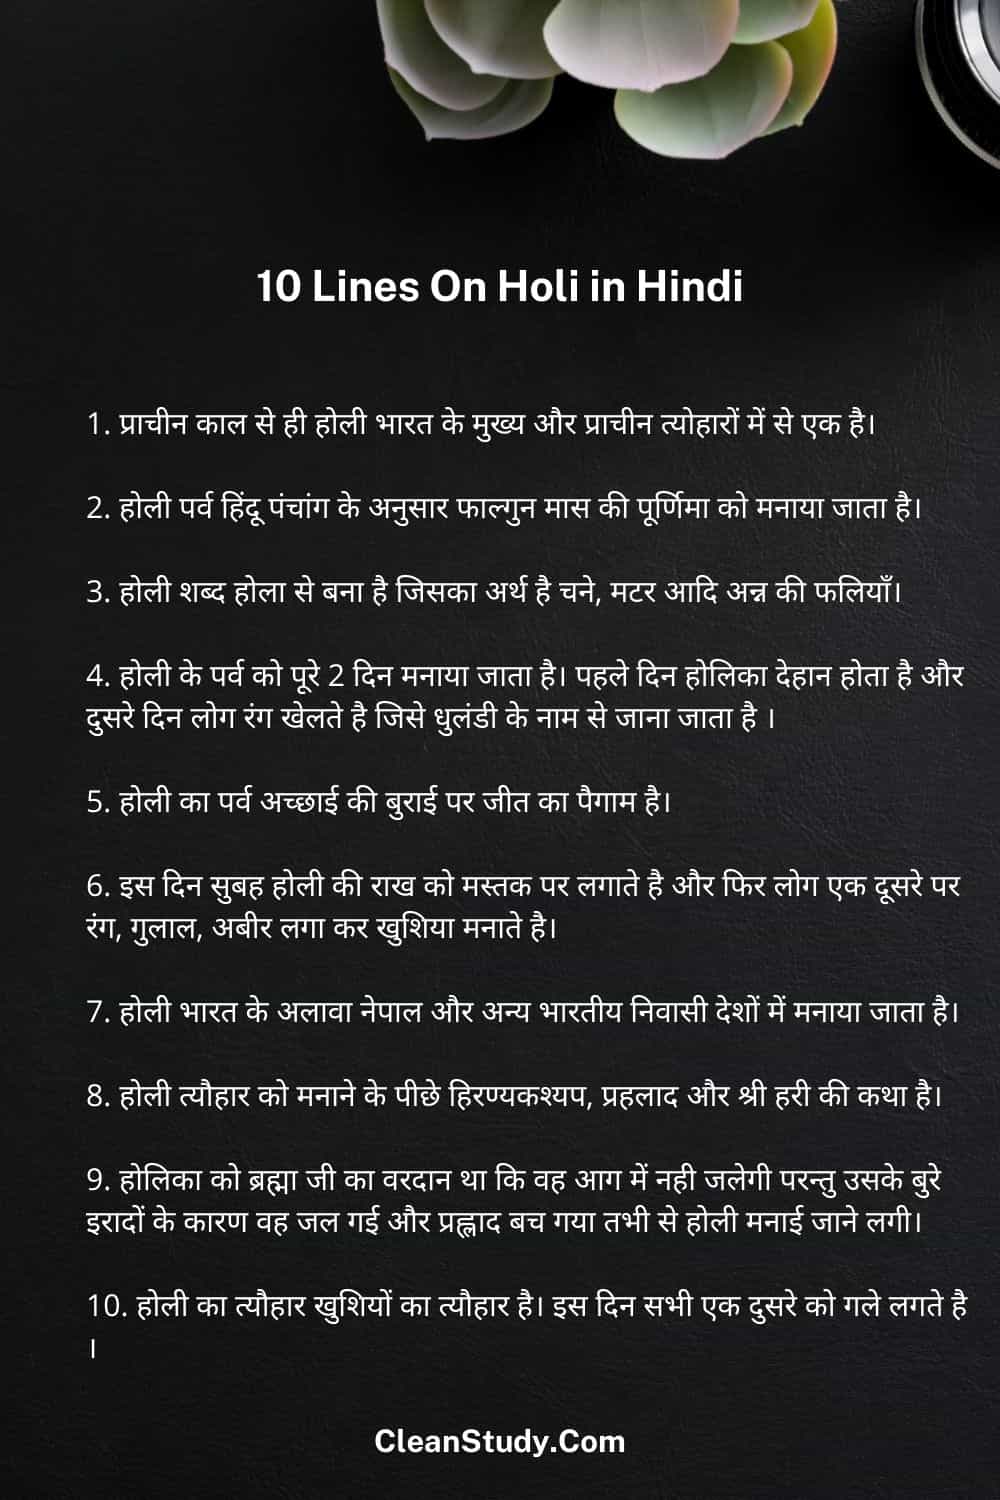 10 lines on holi in hindi